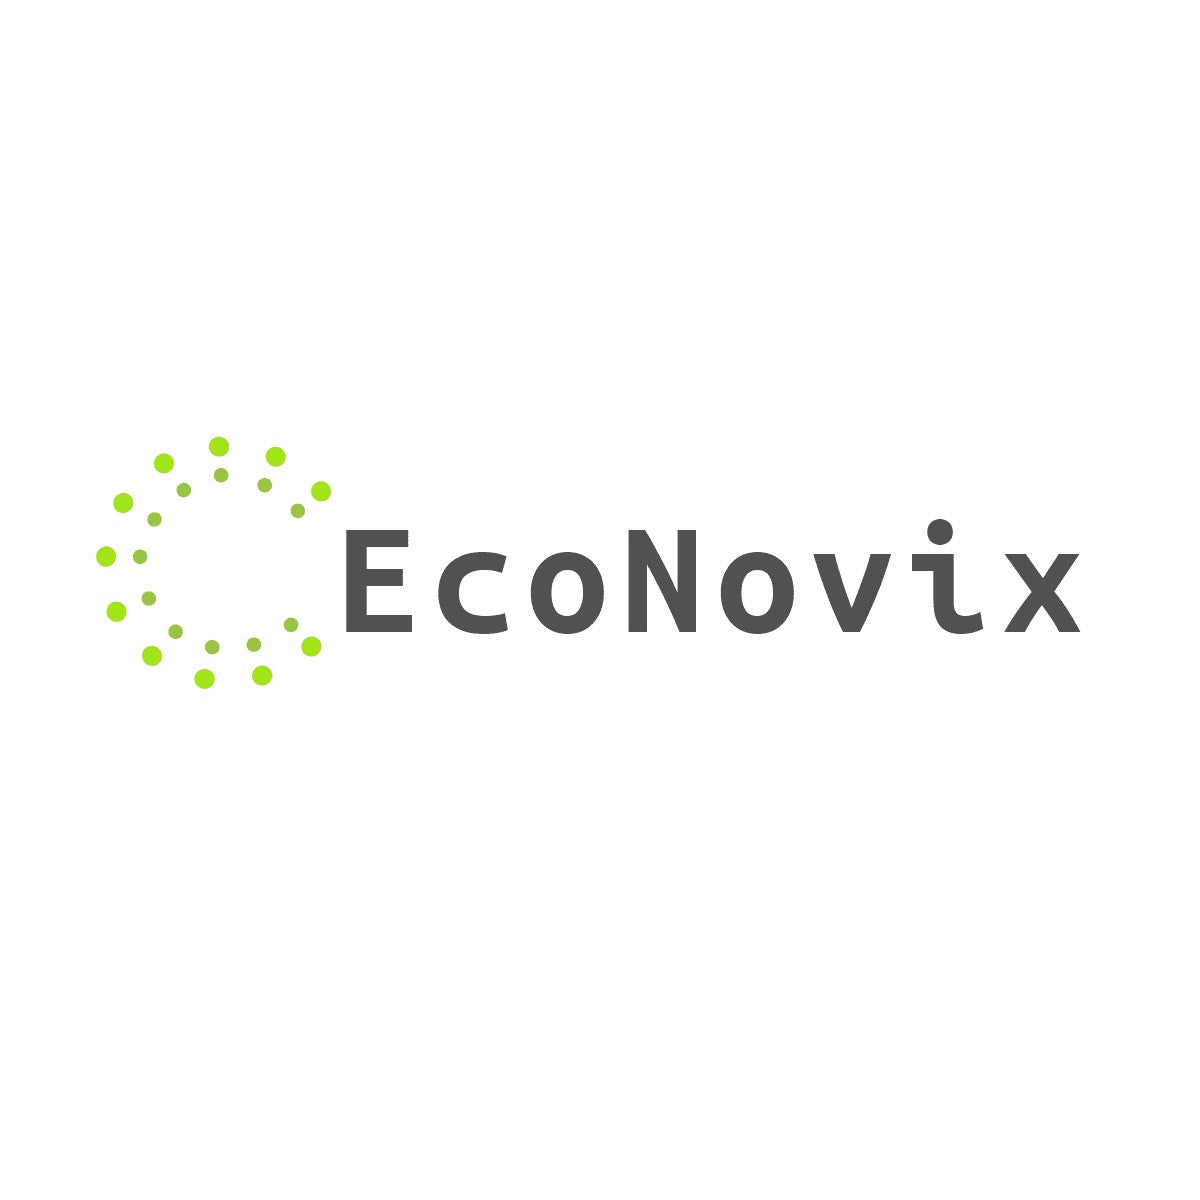 EcoNovix